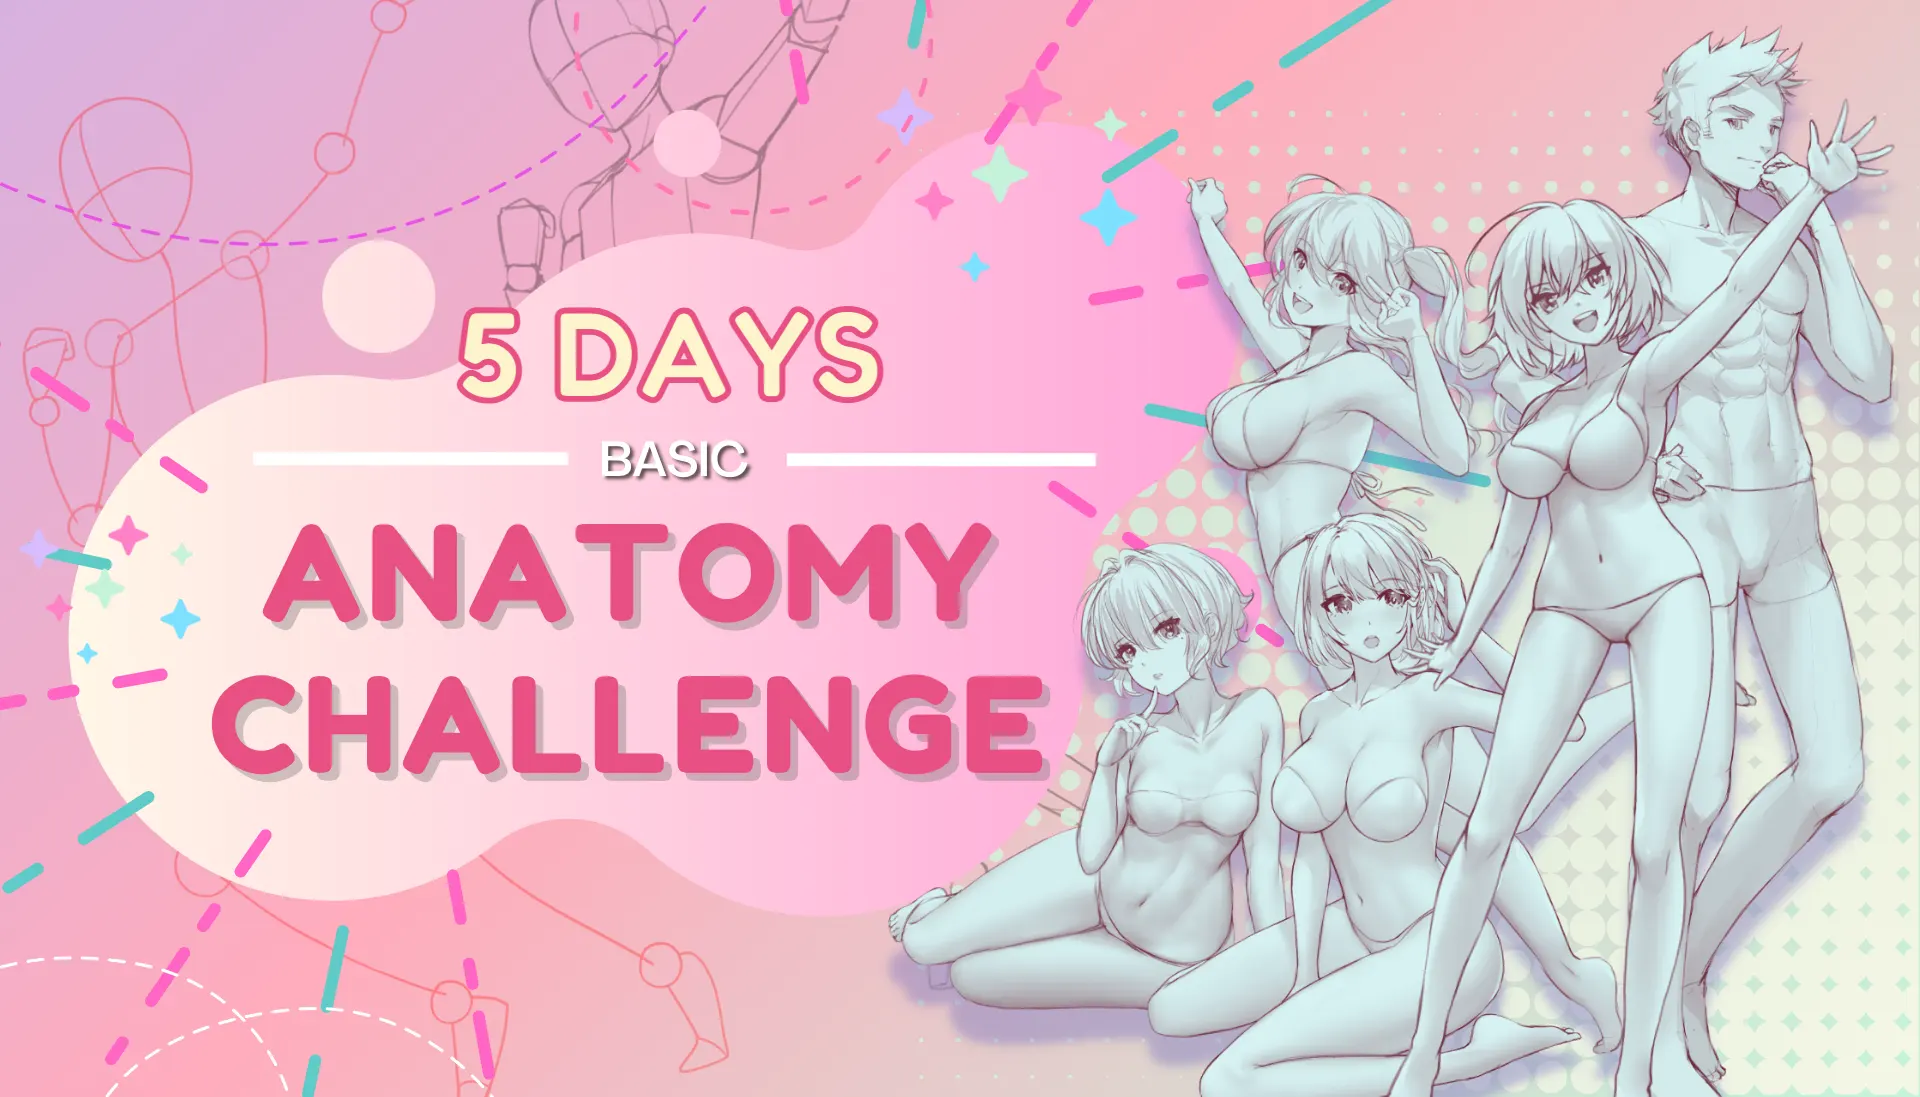 5 Days Basic Anatomy Challenge